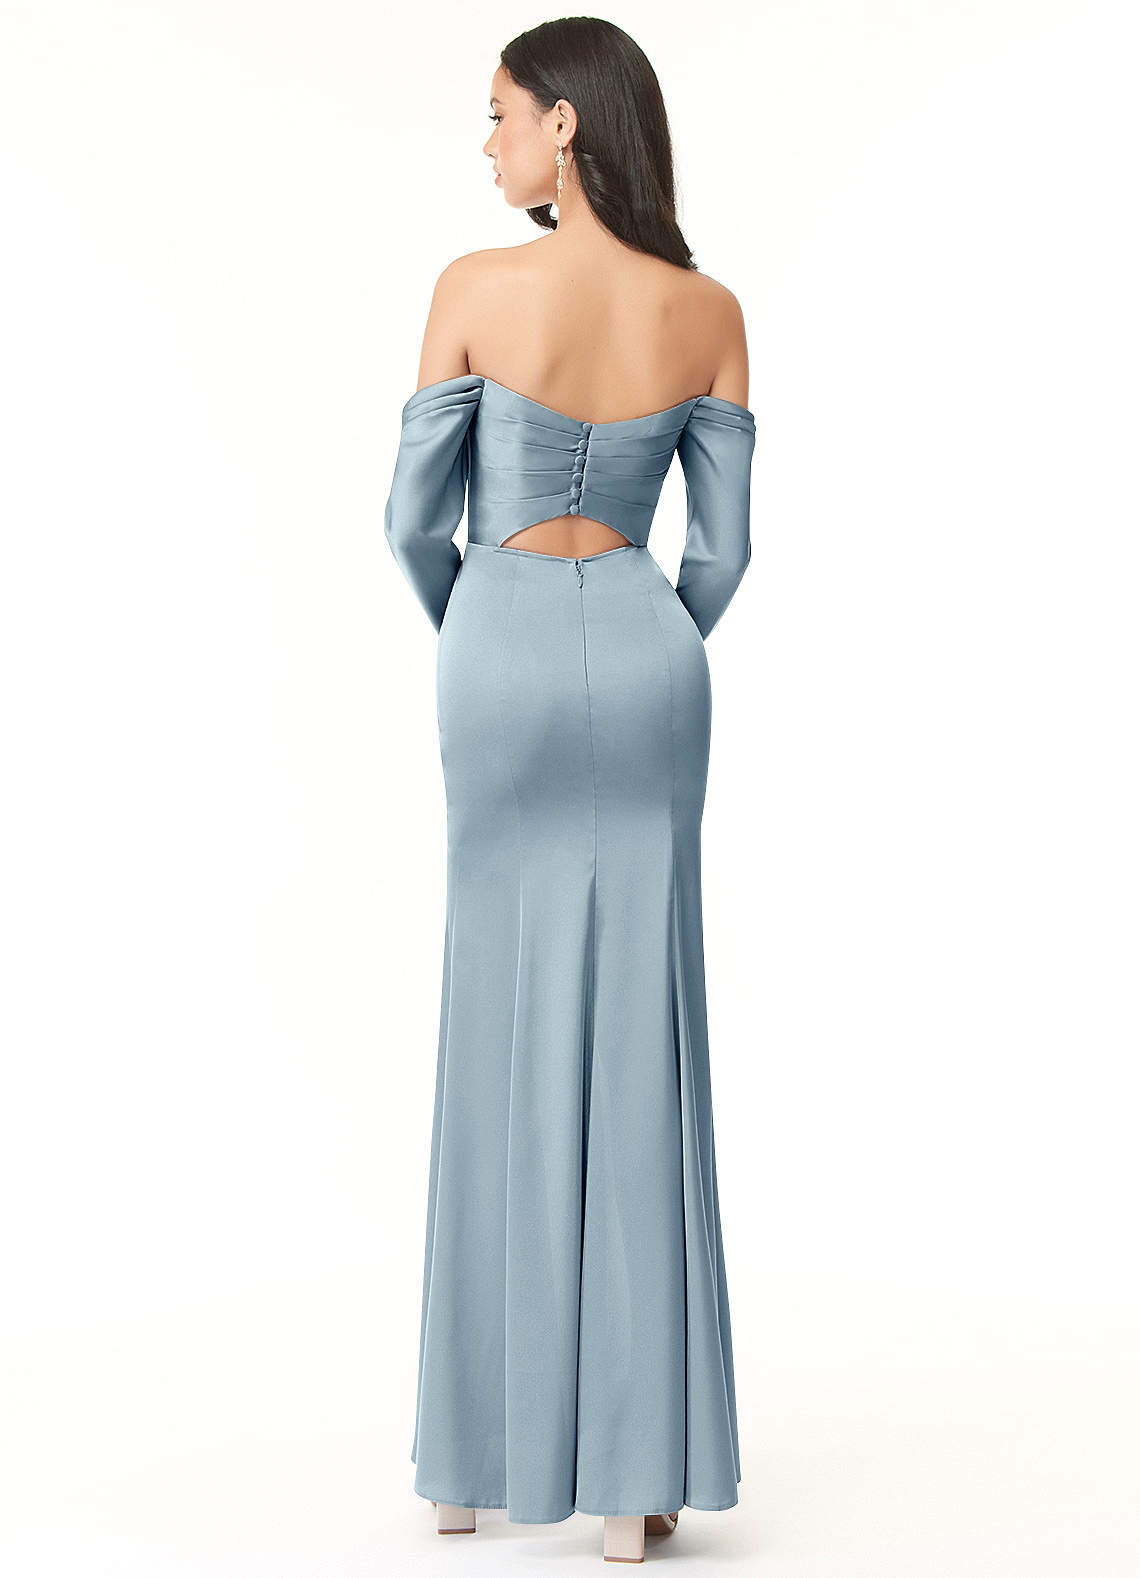 Azazie Hallie Bridesmaid Dresses Sheath Off-The-Shouler Long Sleeve Stretch Satin Floor-Length Dress image1